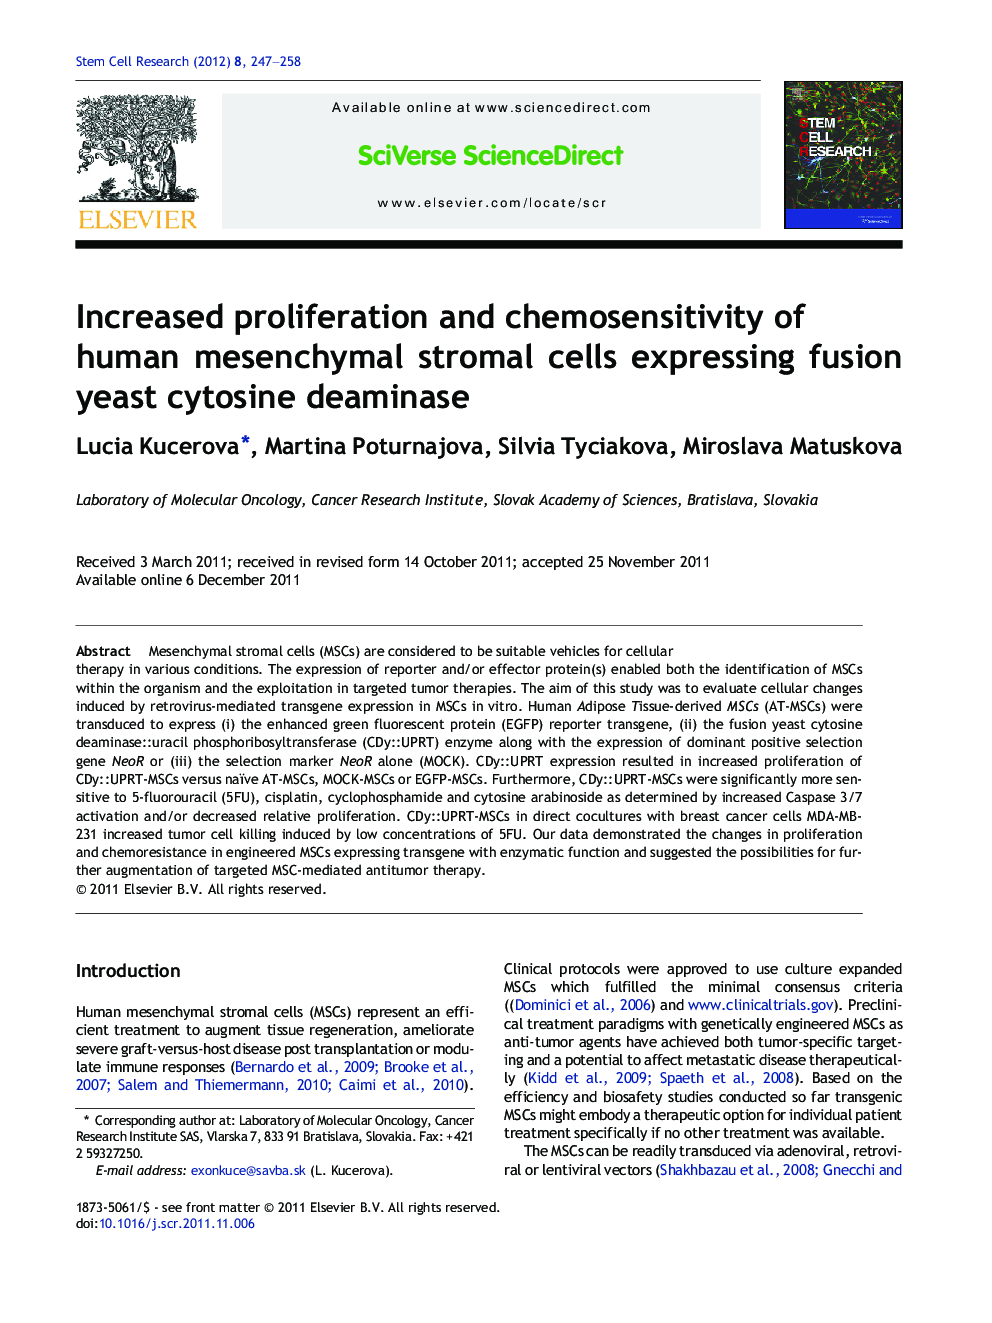 Increased proliferation and chemosensitivity of human mesenchymal stromal cells expressing fusion yeast cytosine deaminase